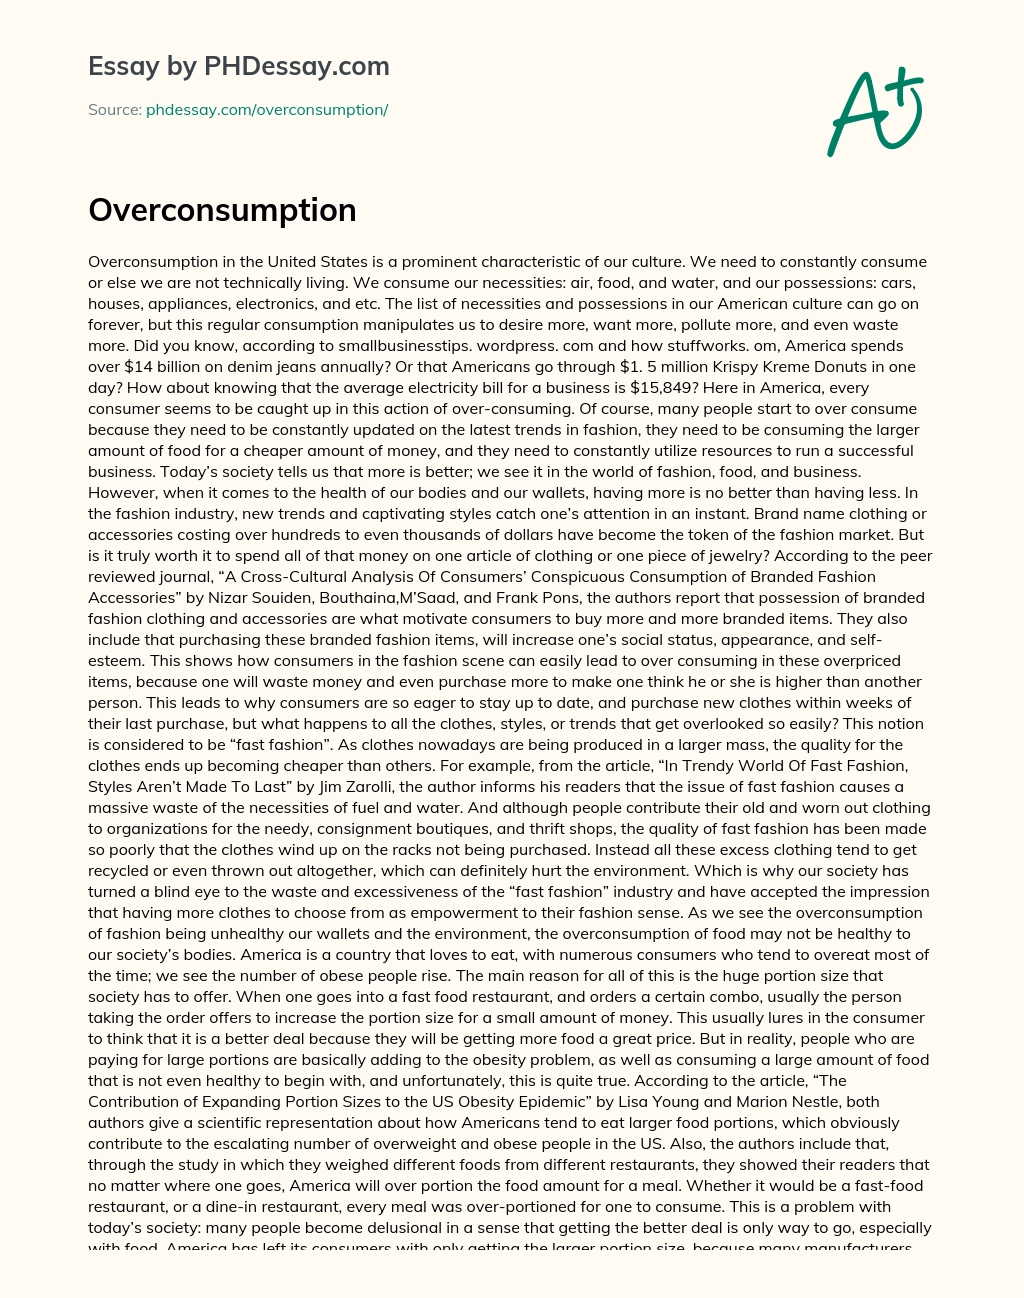 Overconsumption essay